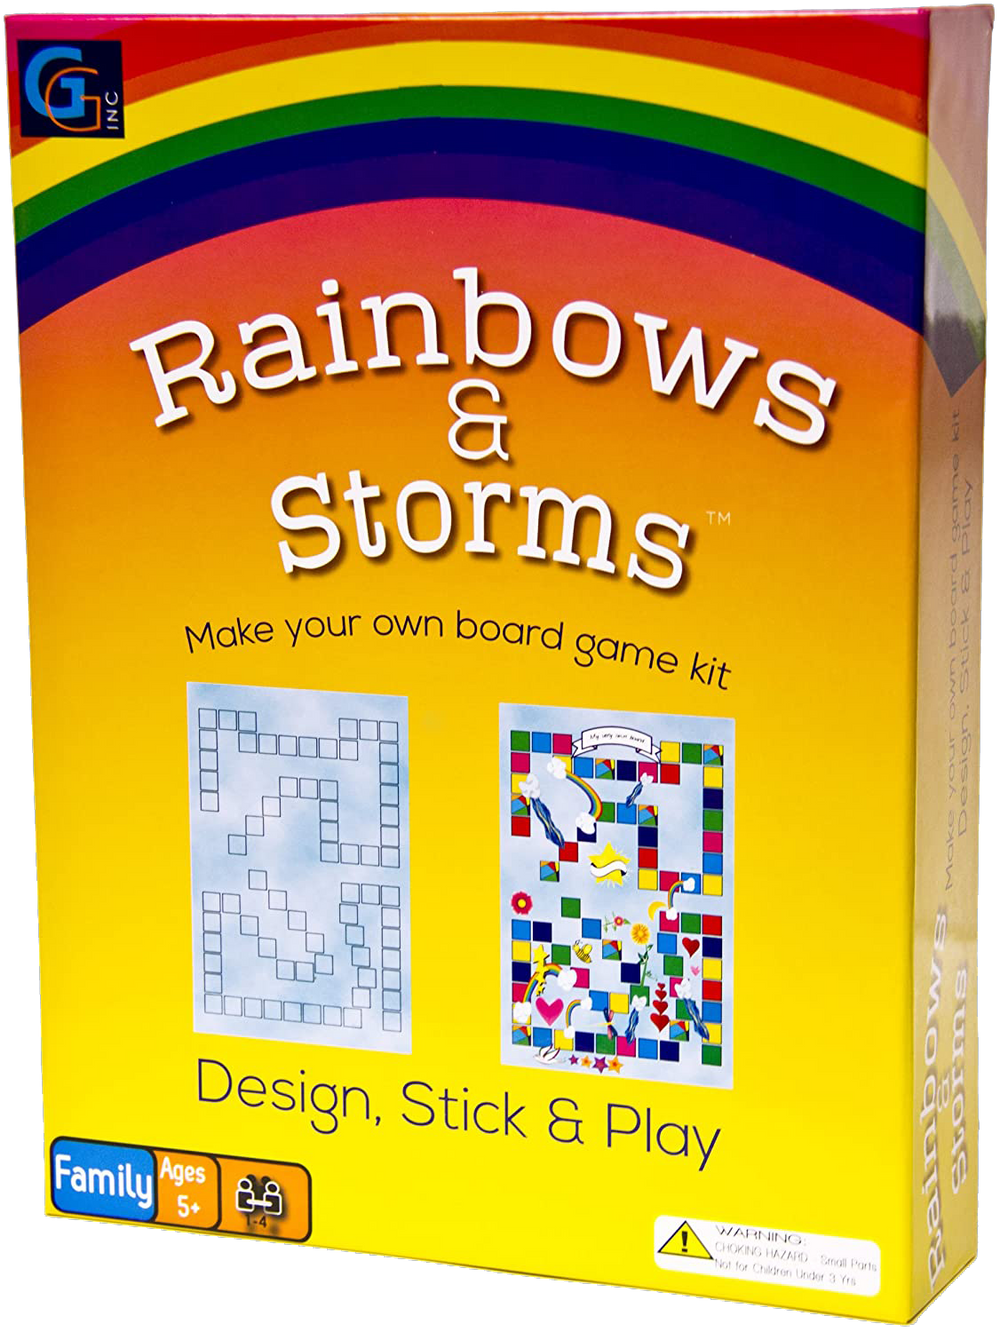 Rainbows & Storms STEM Craft Art Kit  (Wholesale)